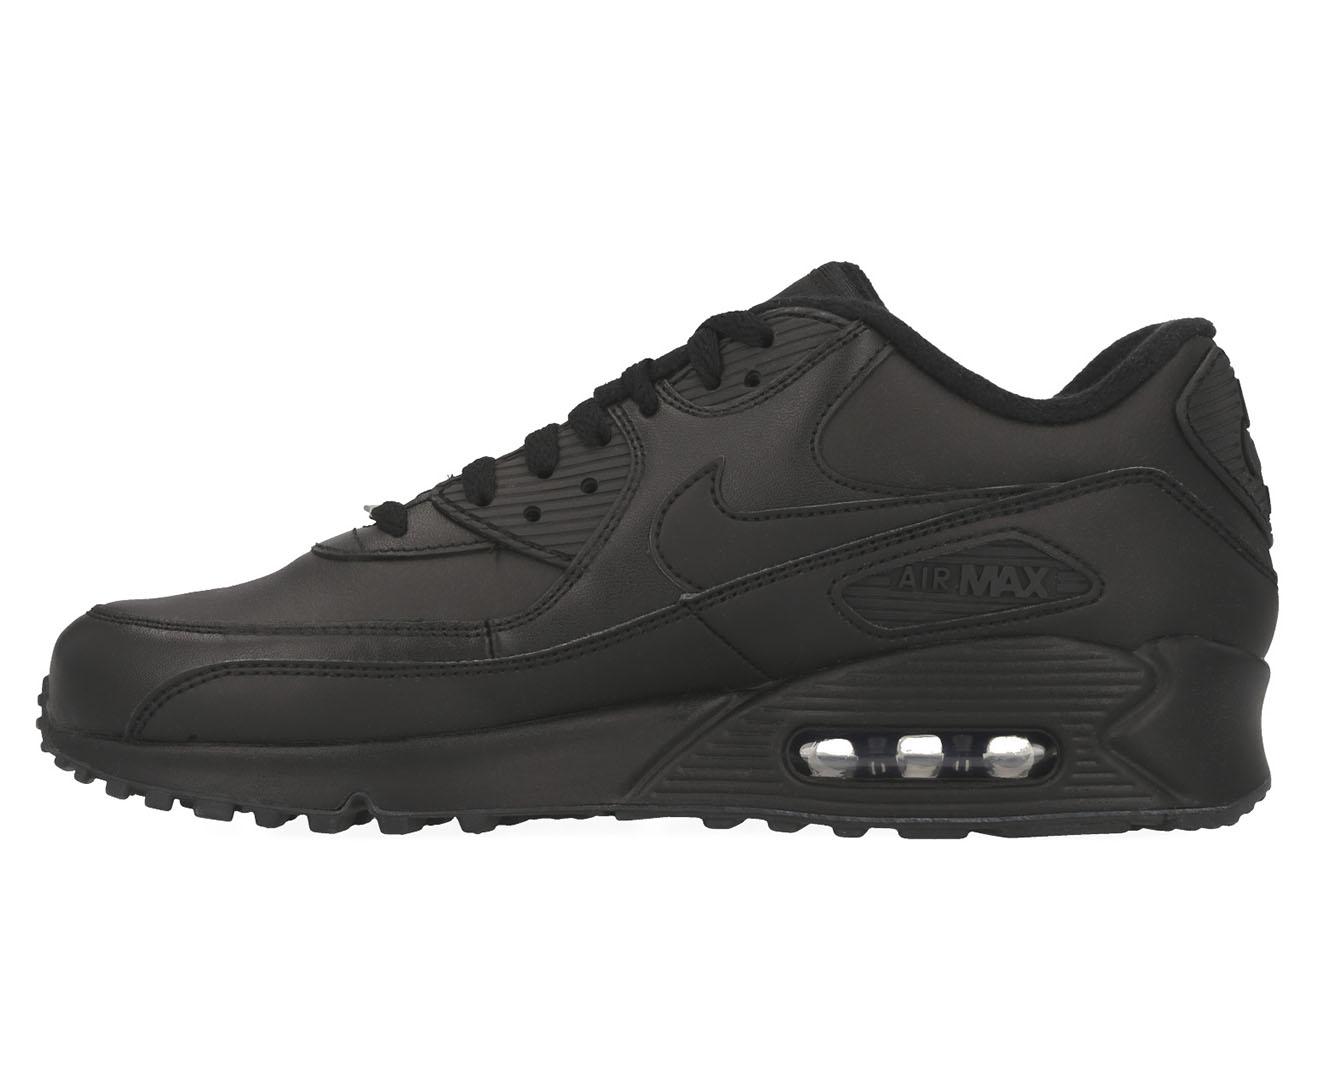 Nike Men's Air Max 90 Leather Sneakers - Black/Black | Catch.com.au